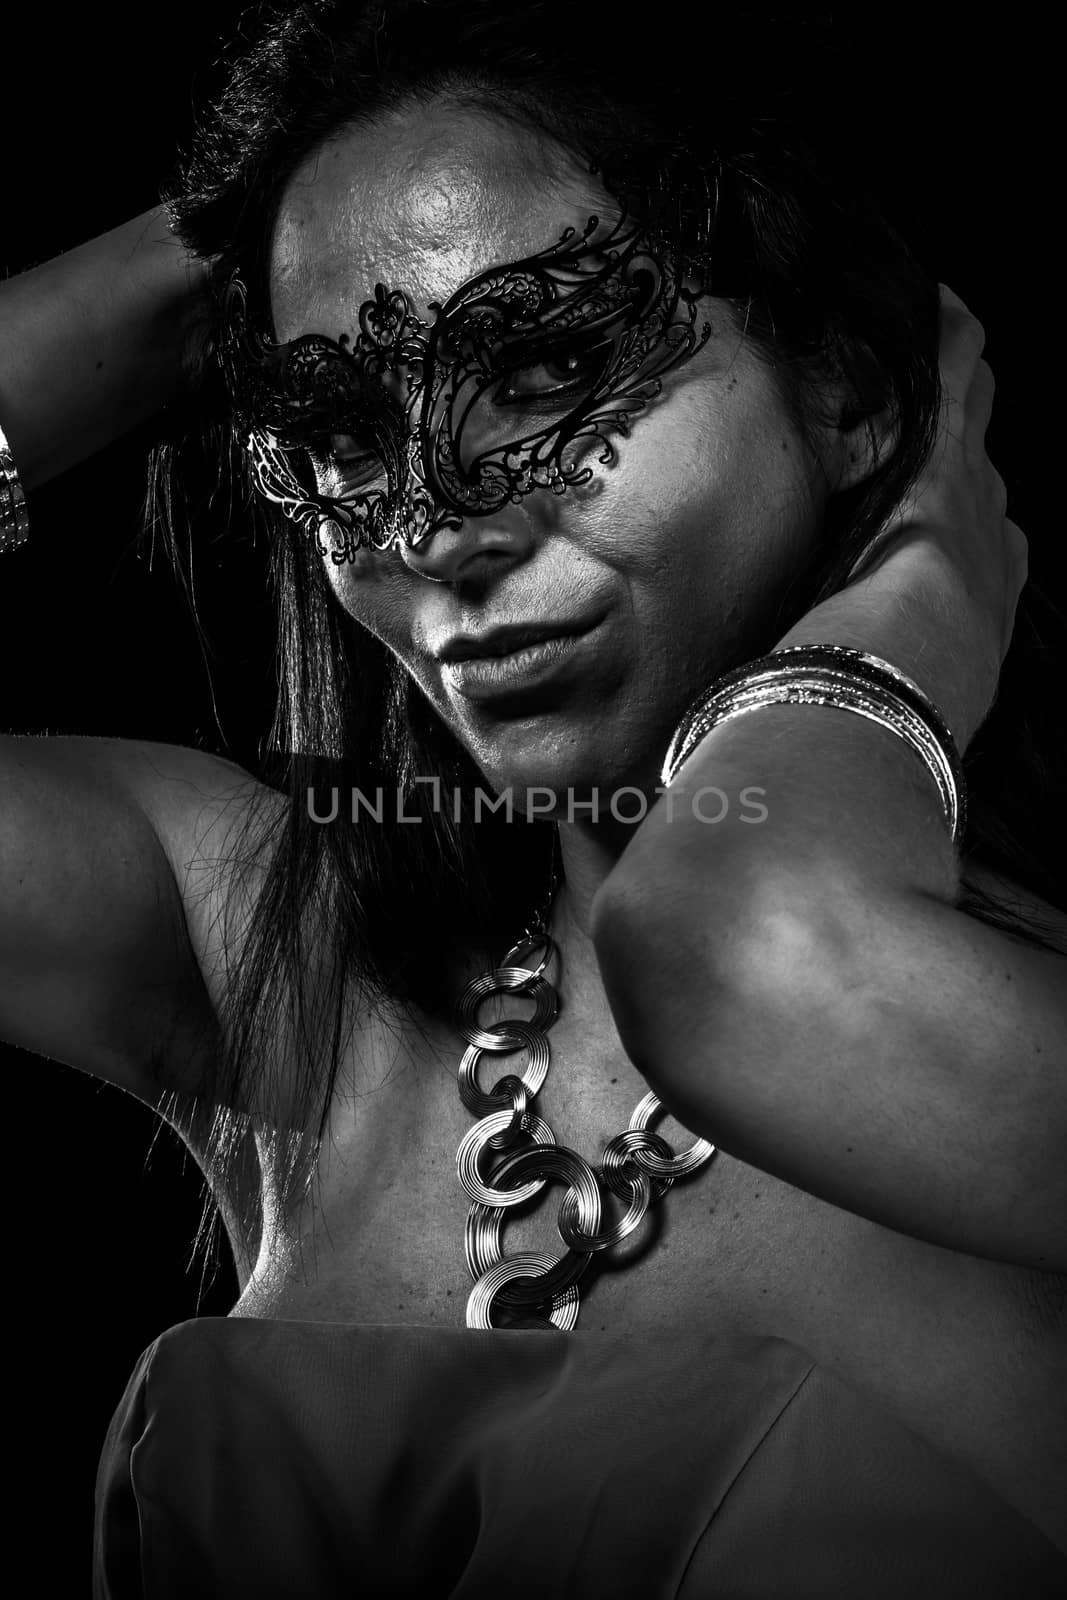 Beautiful young woman in mysterious black Venetian mask. Fashion photo. tribal design.